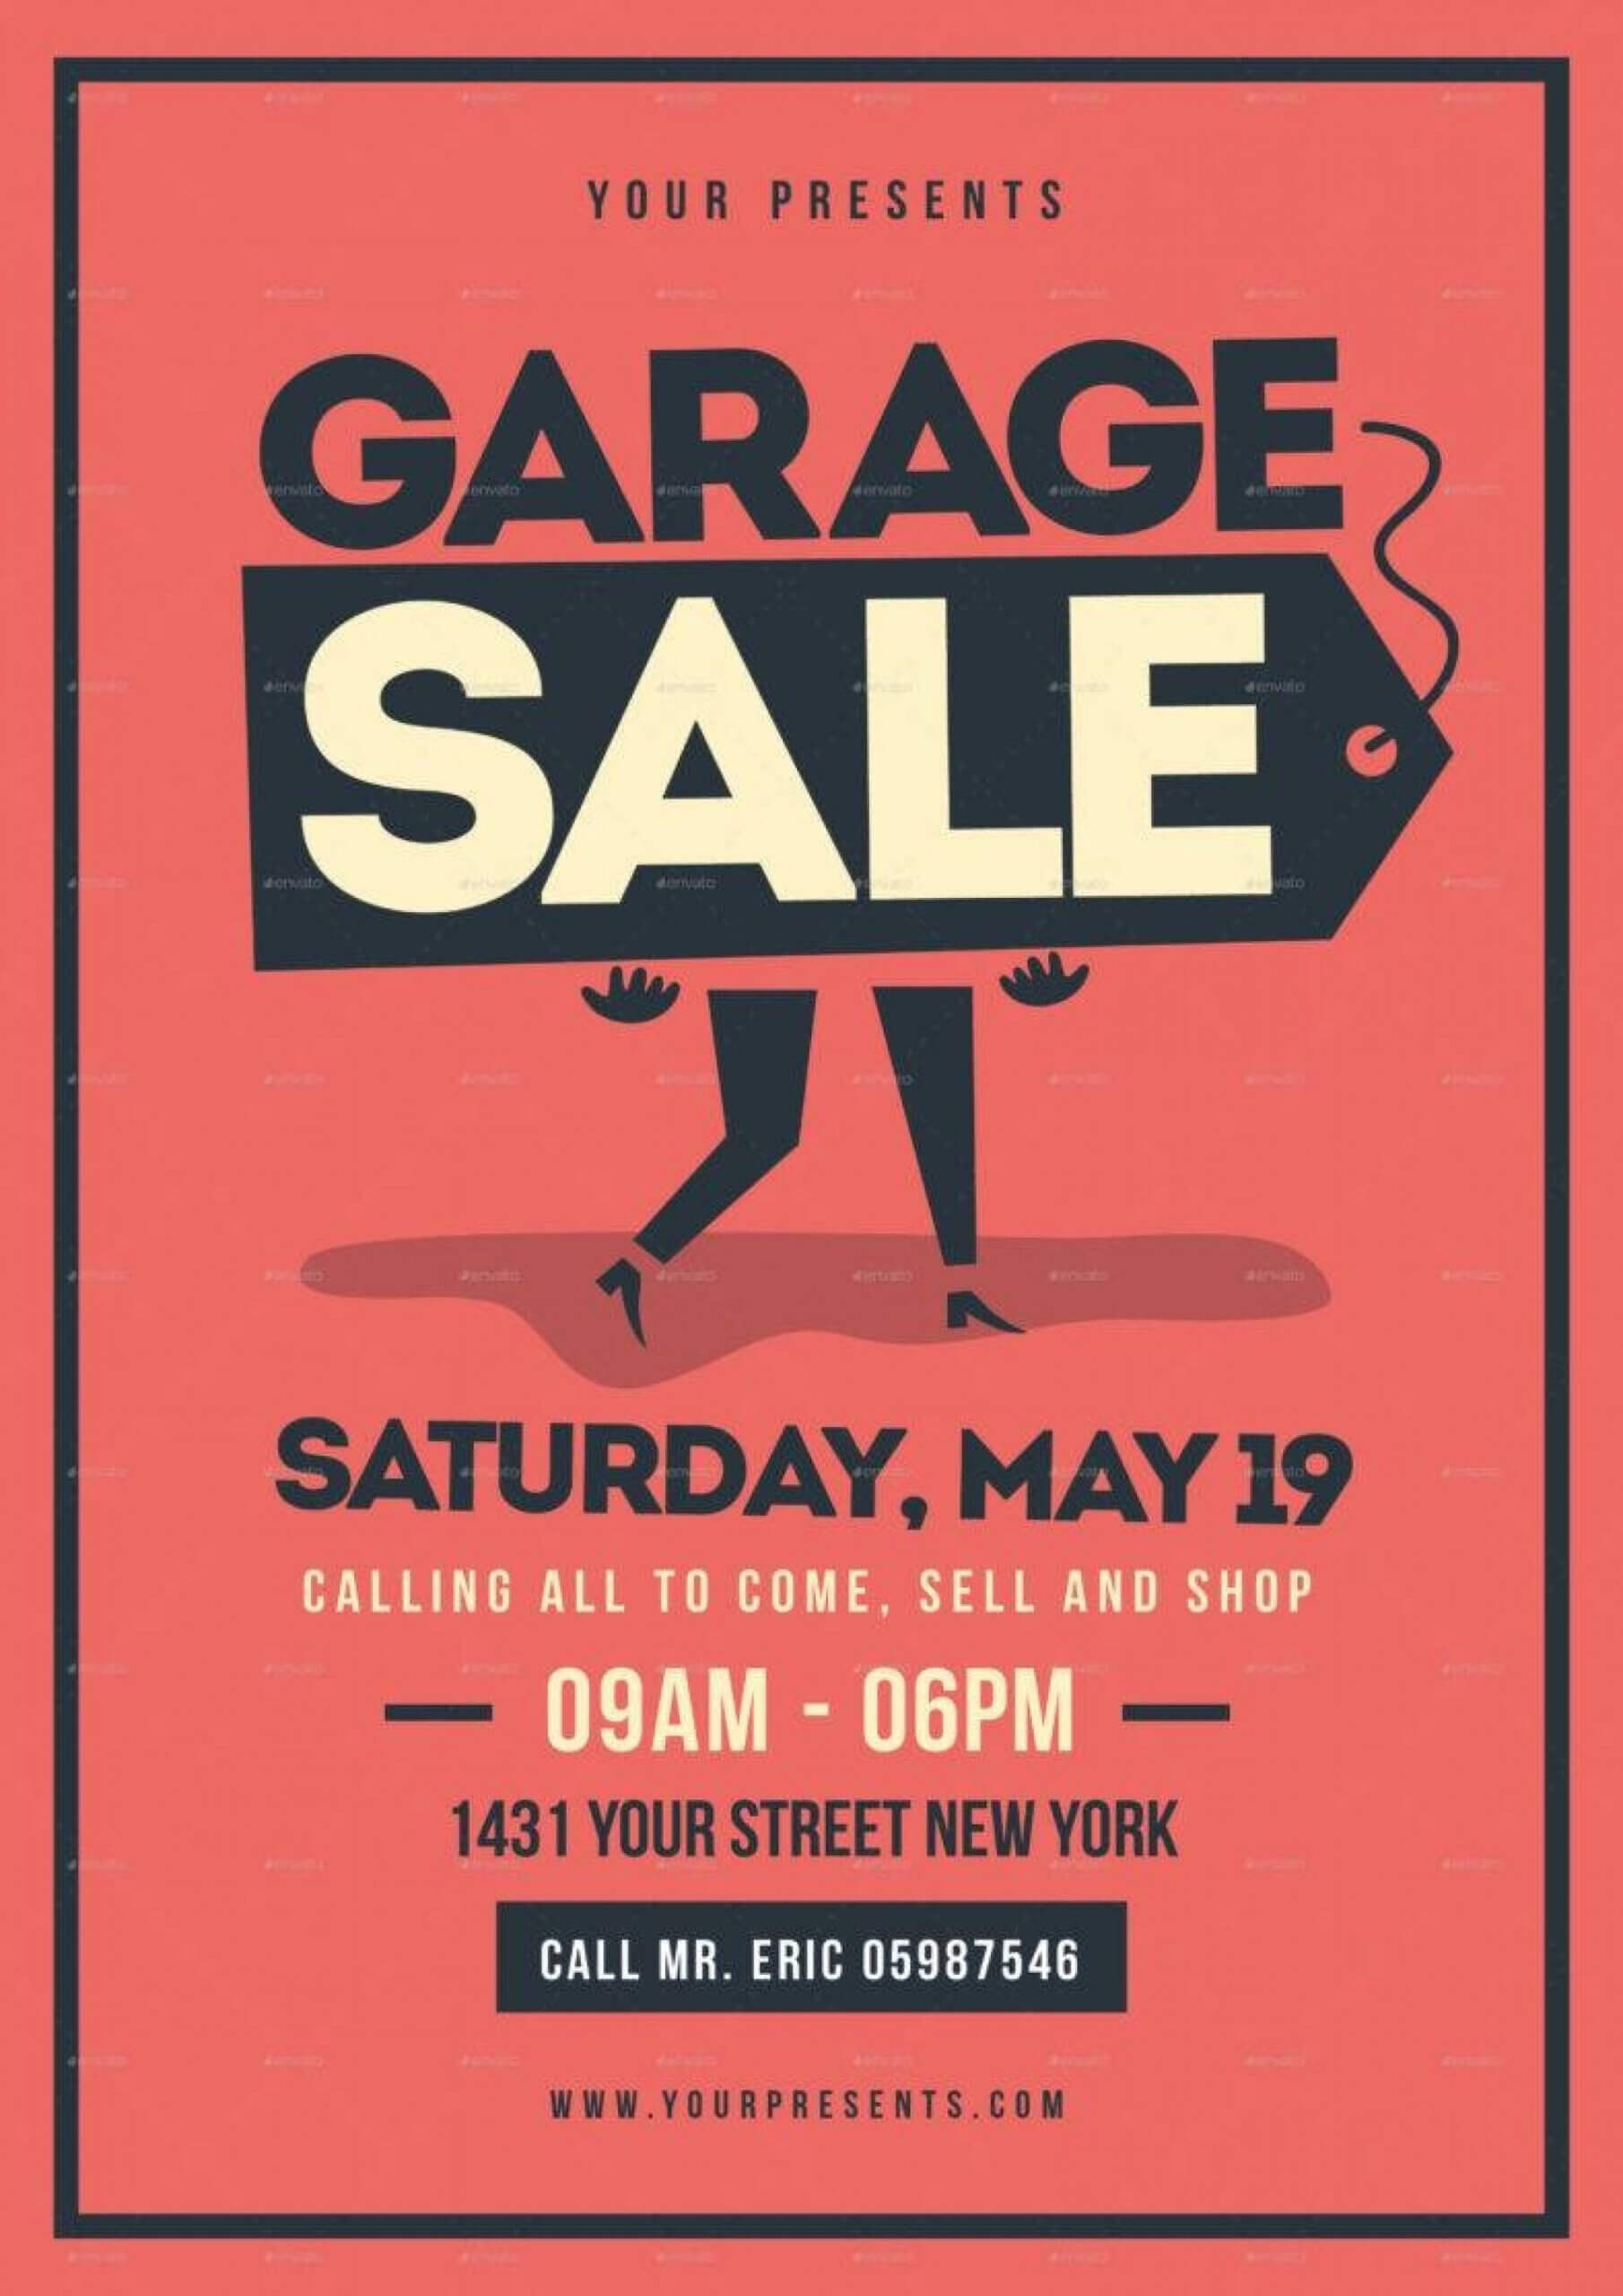 005 Garage Sale Flyer Template Word Ideas Retro Stunning Regarding Garage Sale Flyer Template Word